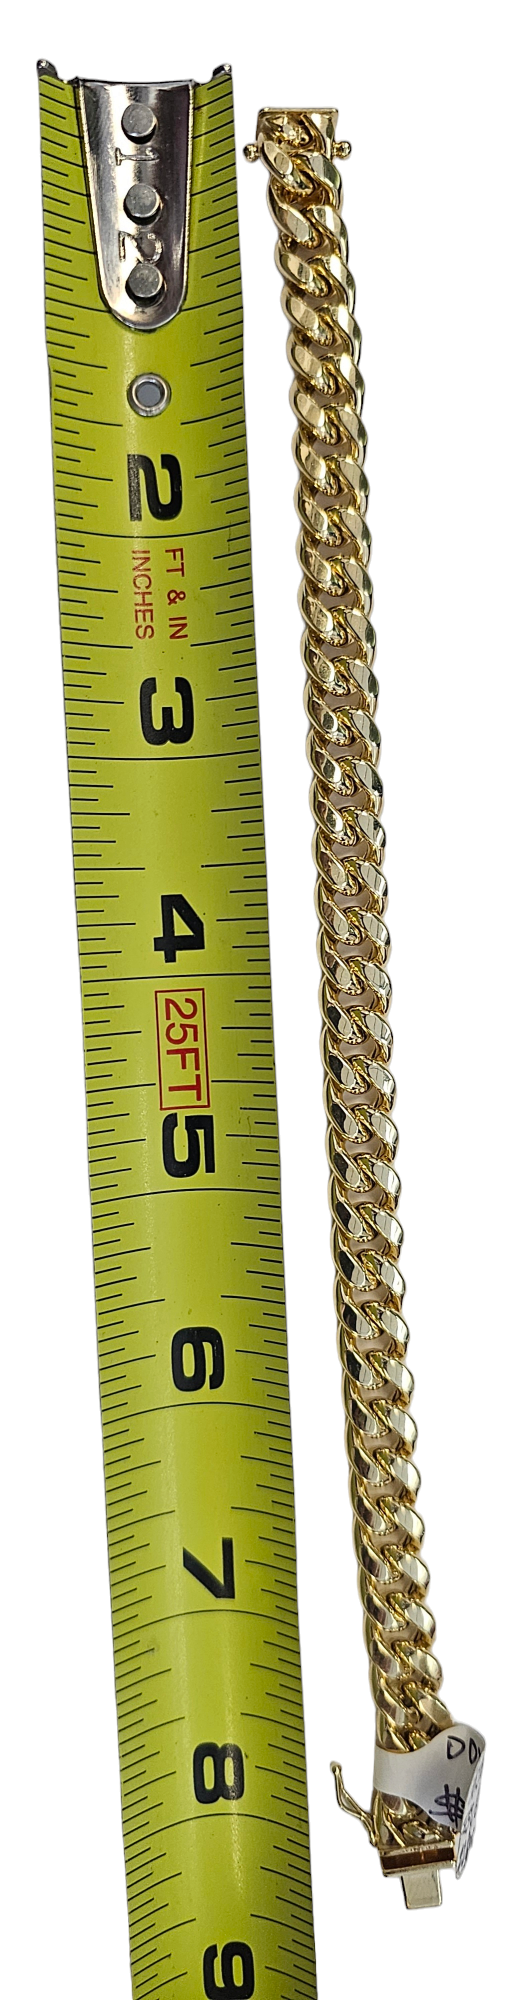 Cuban Link Style Semi-Solid Bracelet made in 14-Karat Yellow Gold